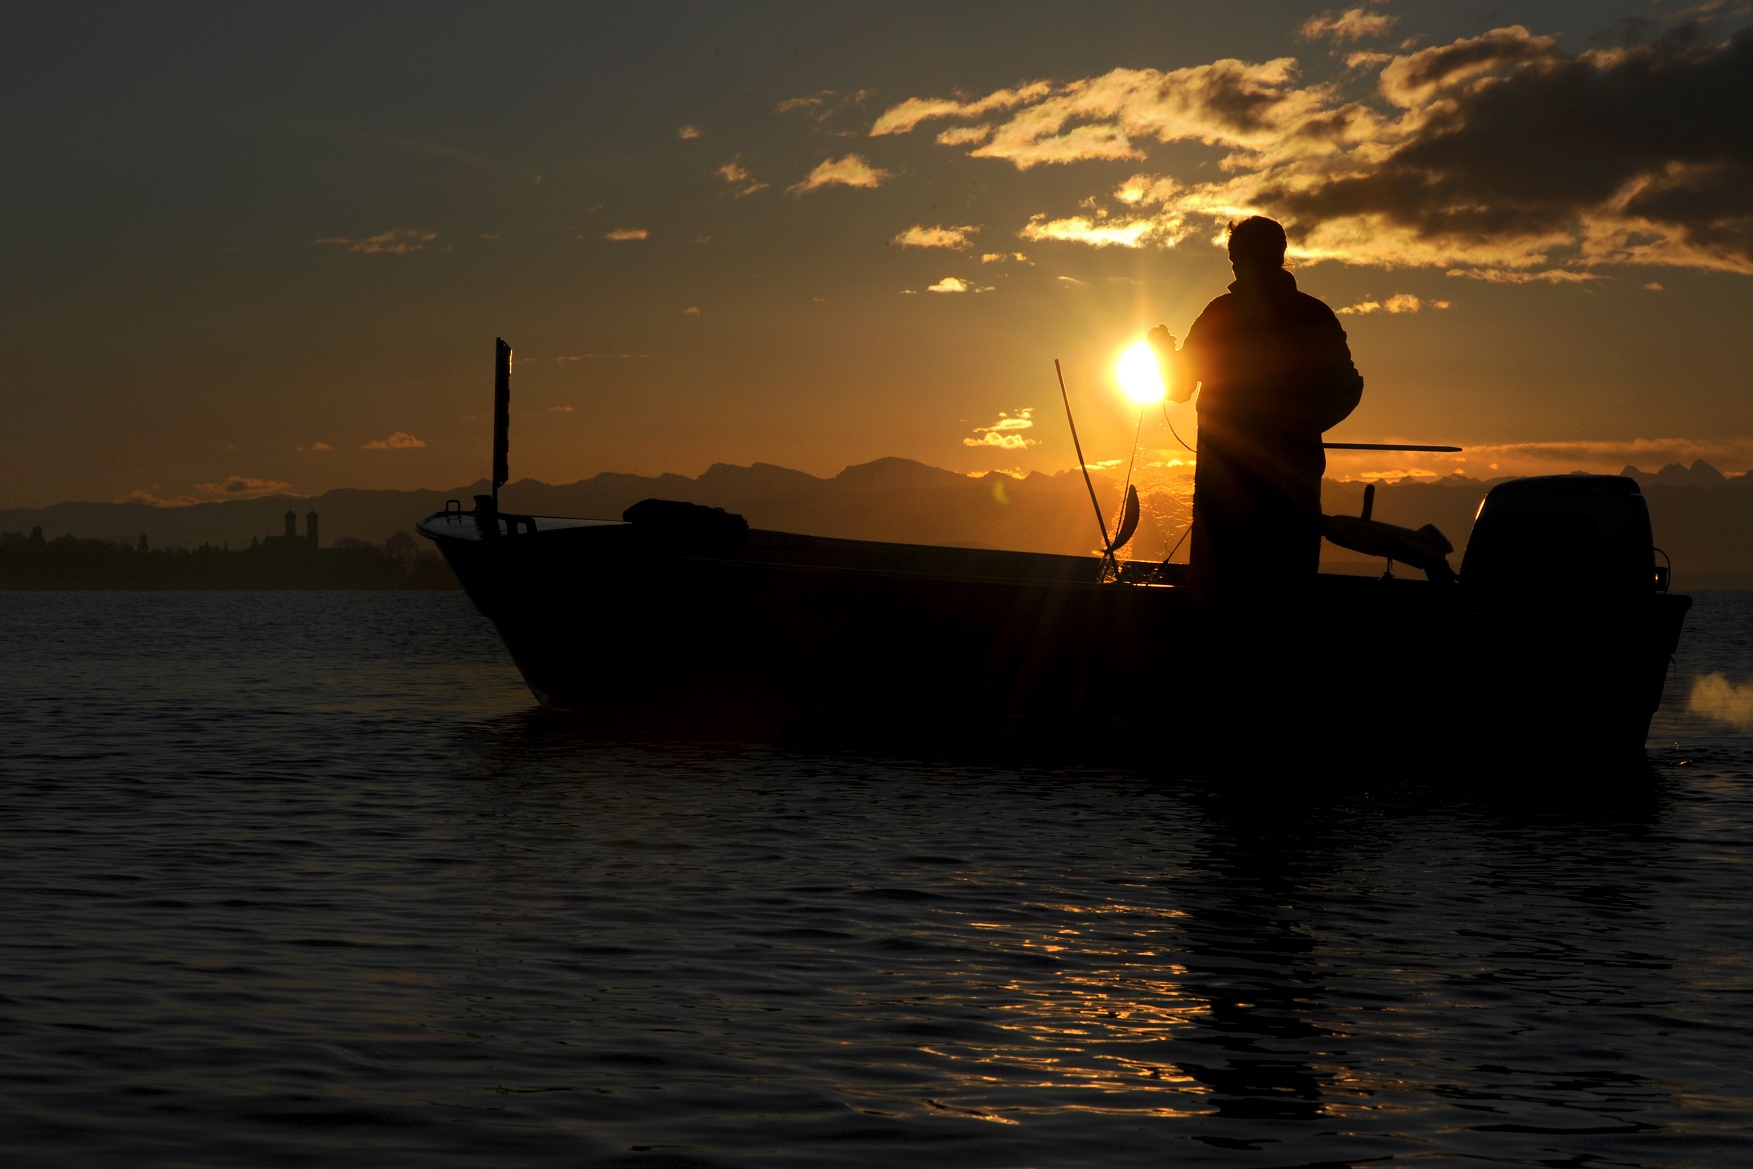 Os pescadores defendem medidas "poluentes" para devolver ao lago "a naturalidade perdida". Foto Felix Kaestle/DPA